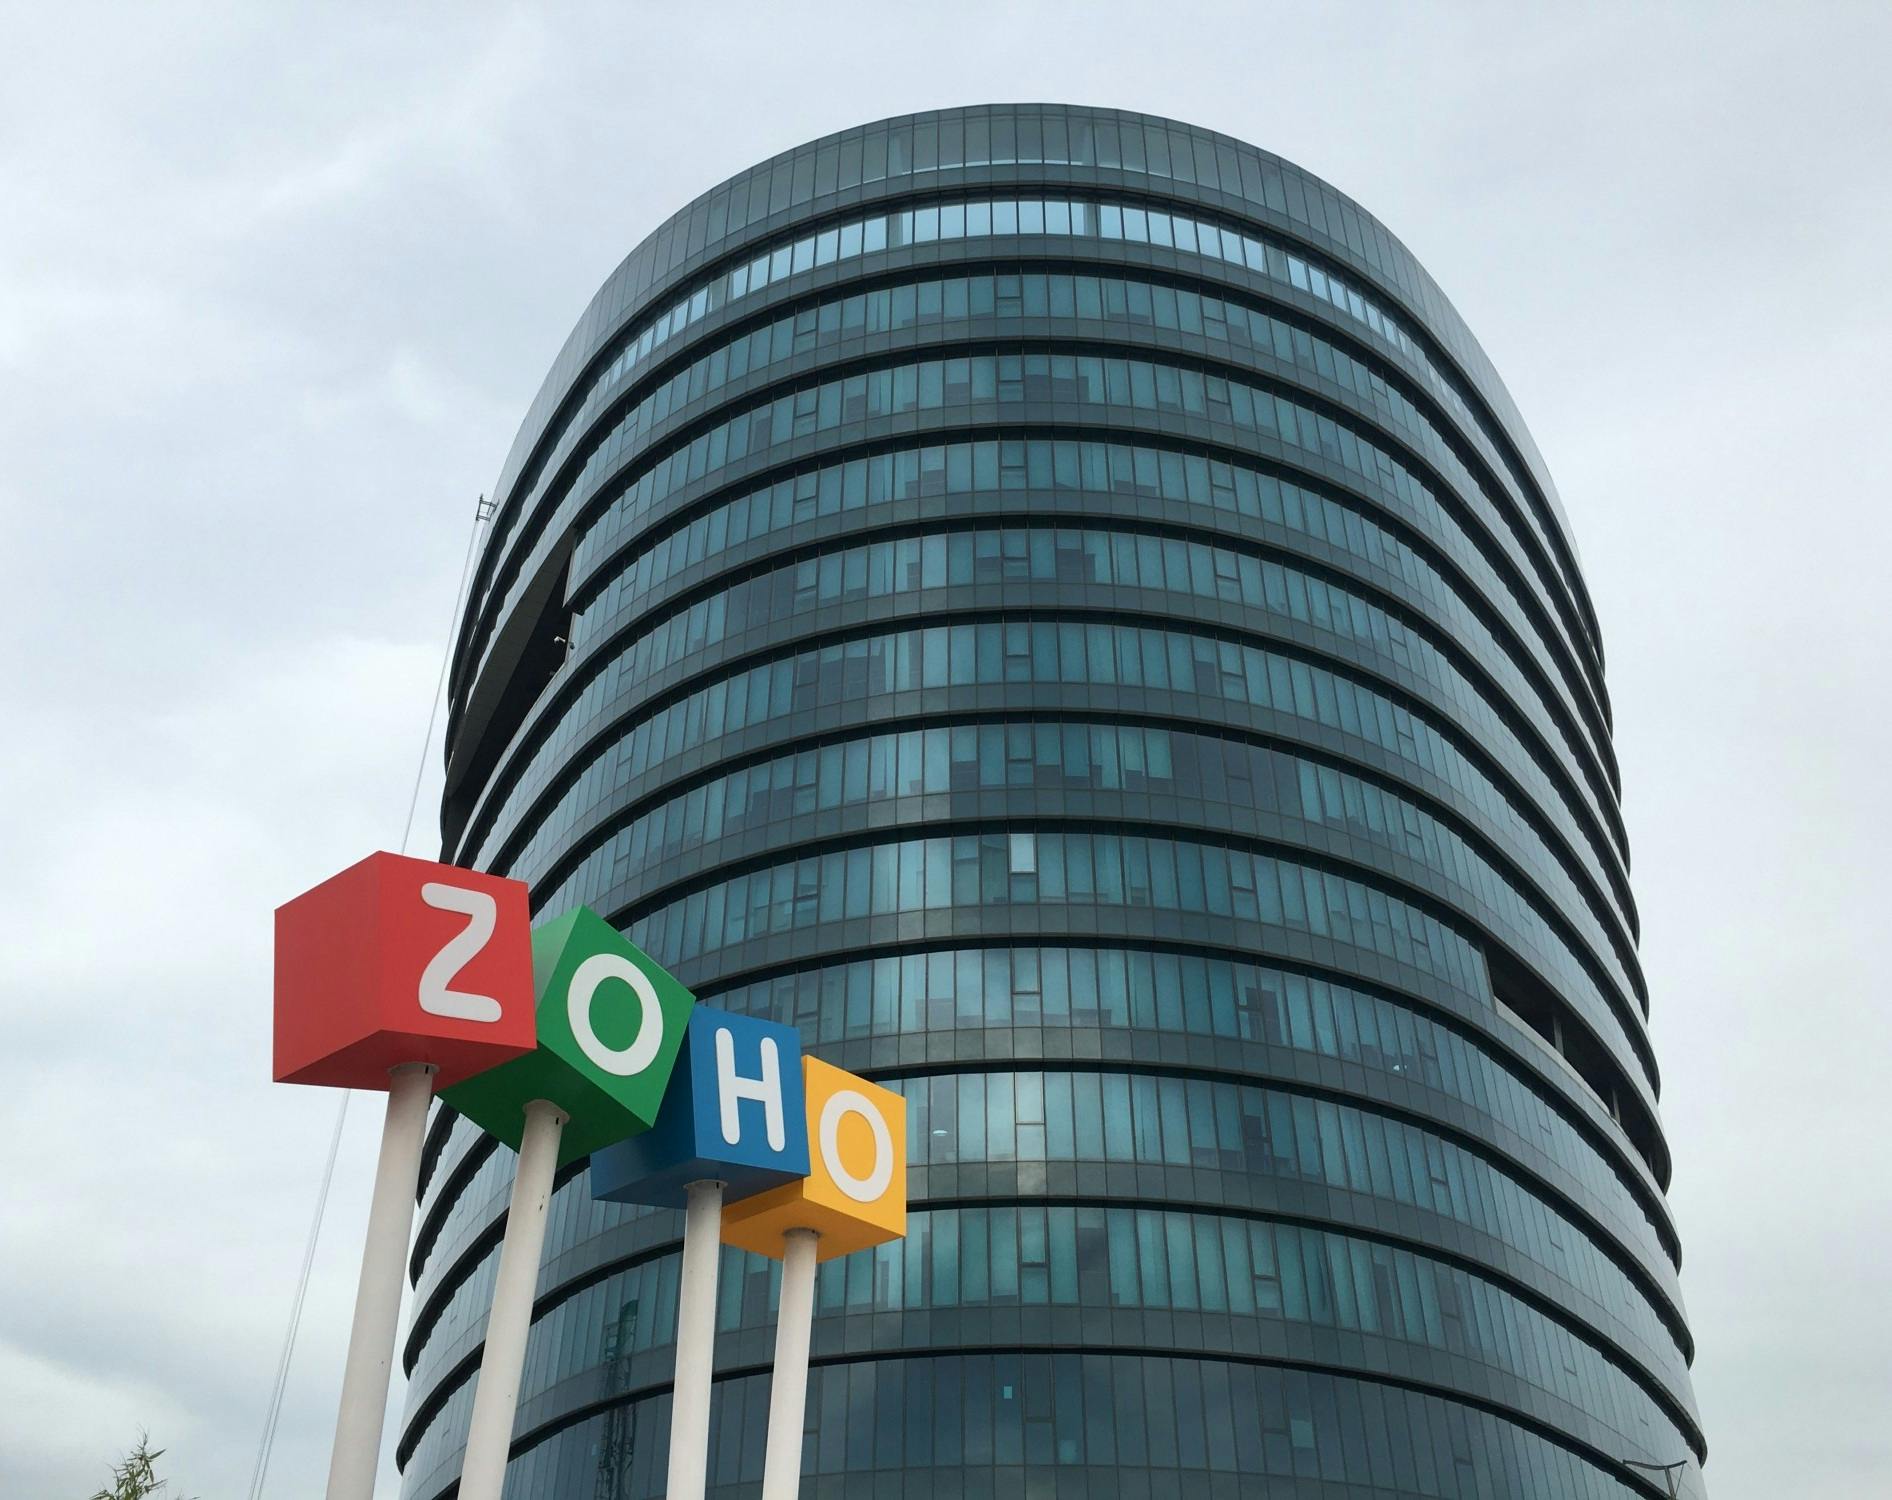 Zoho headquarters in Chennai, India (Samuel John)